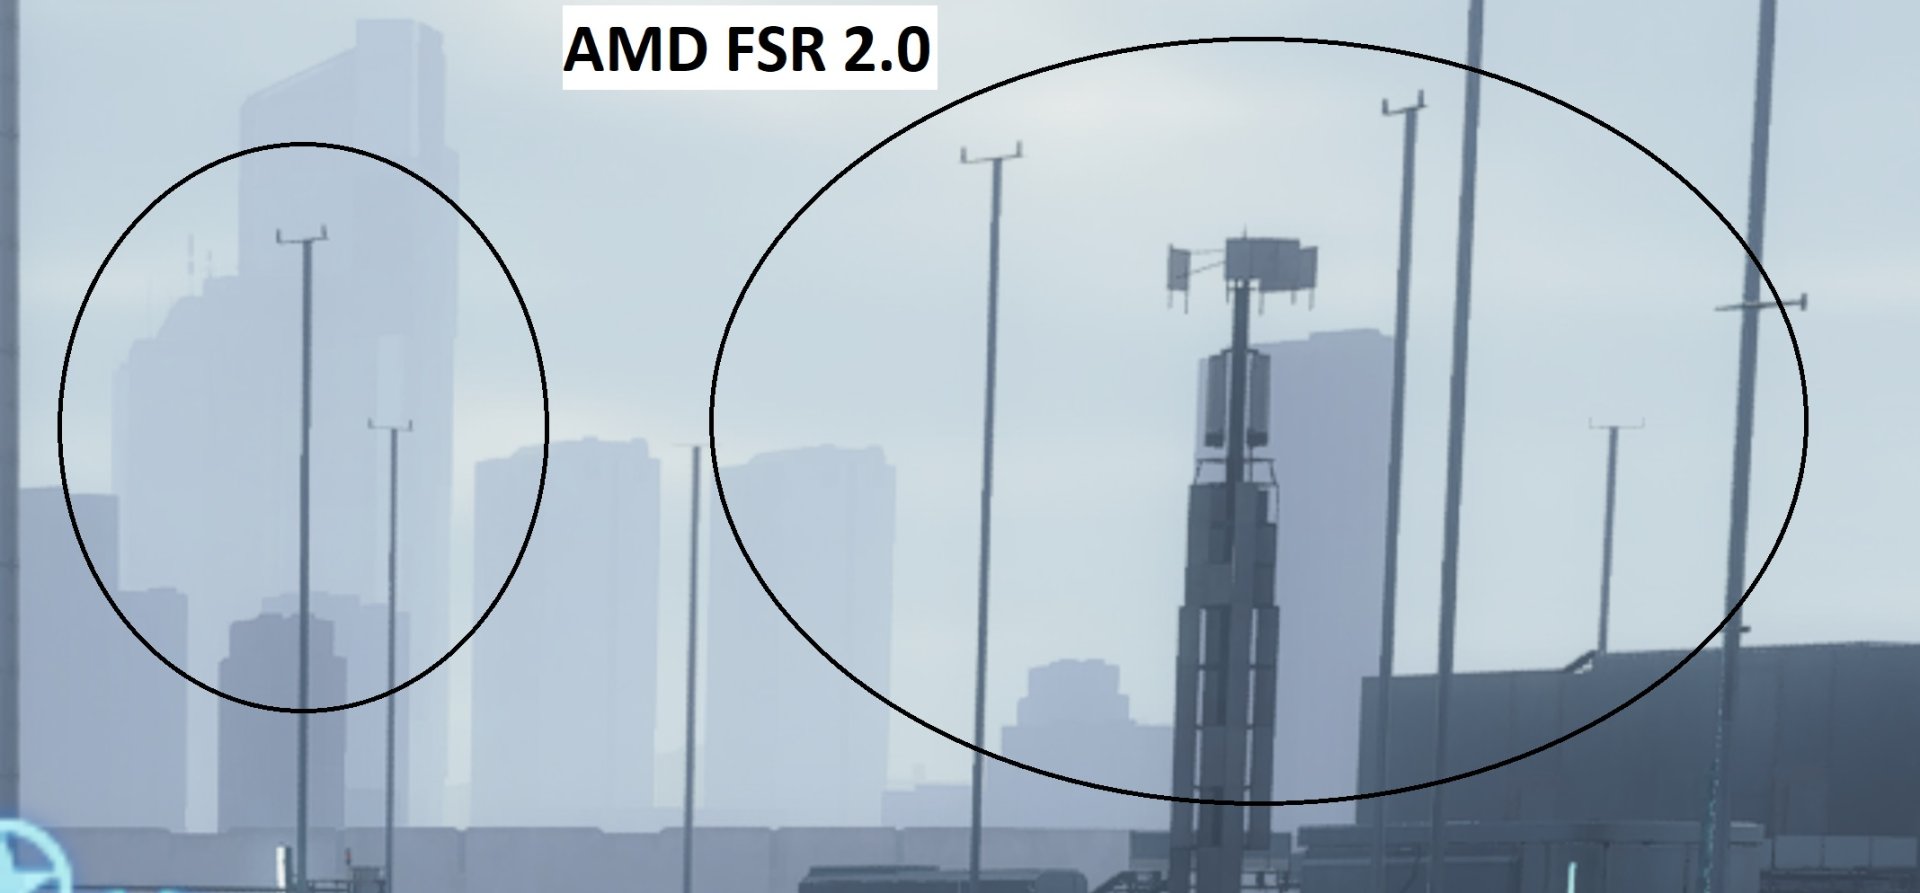 AMD FSR 2.0 worse AA